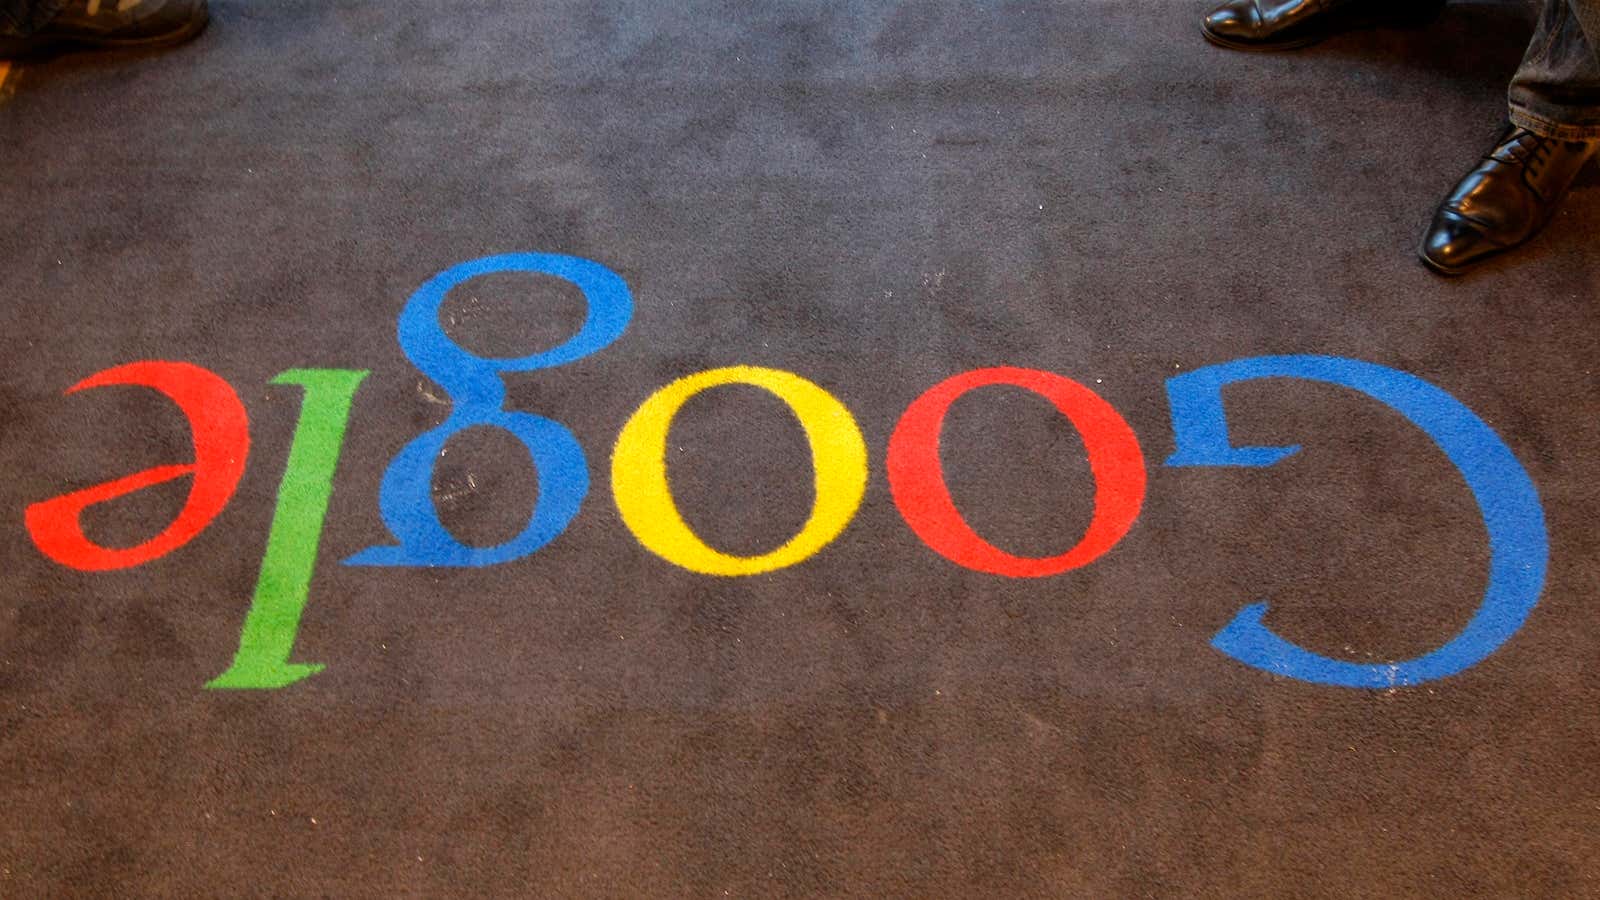 The carpet at Google’s office in Paris